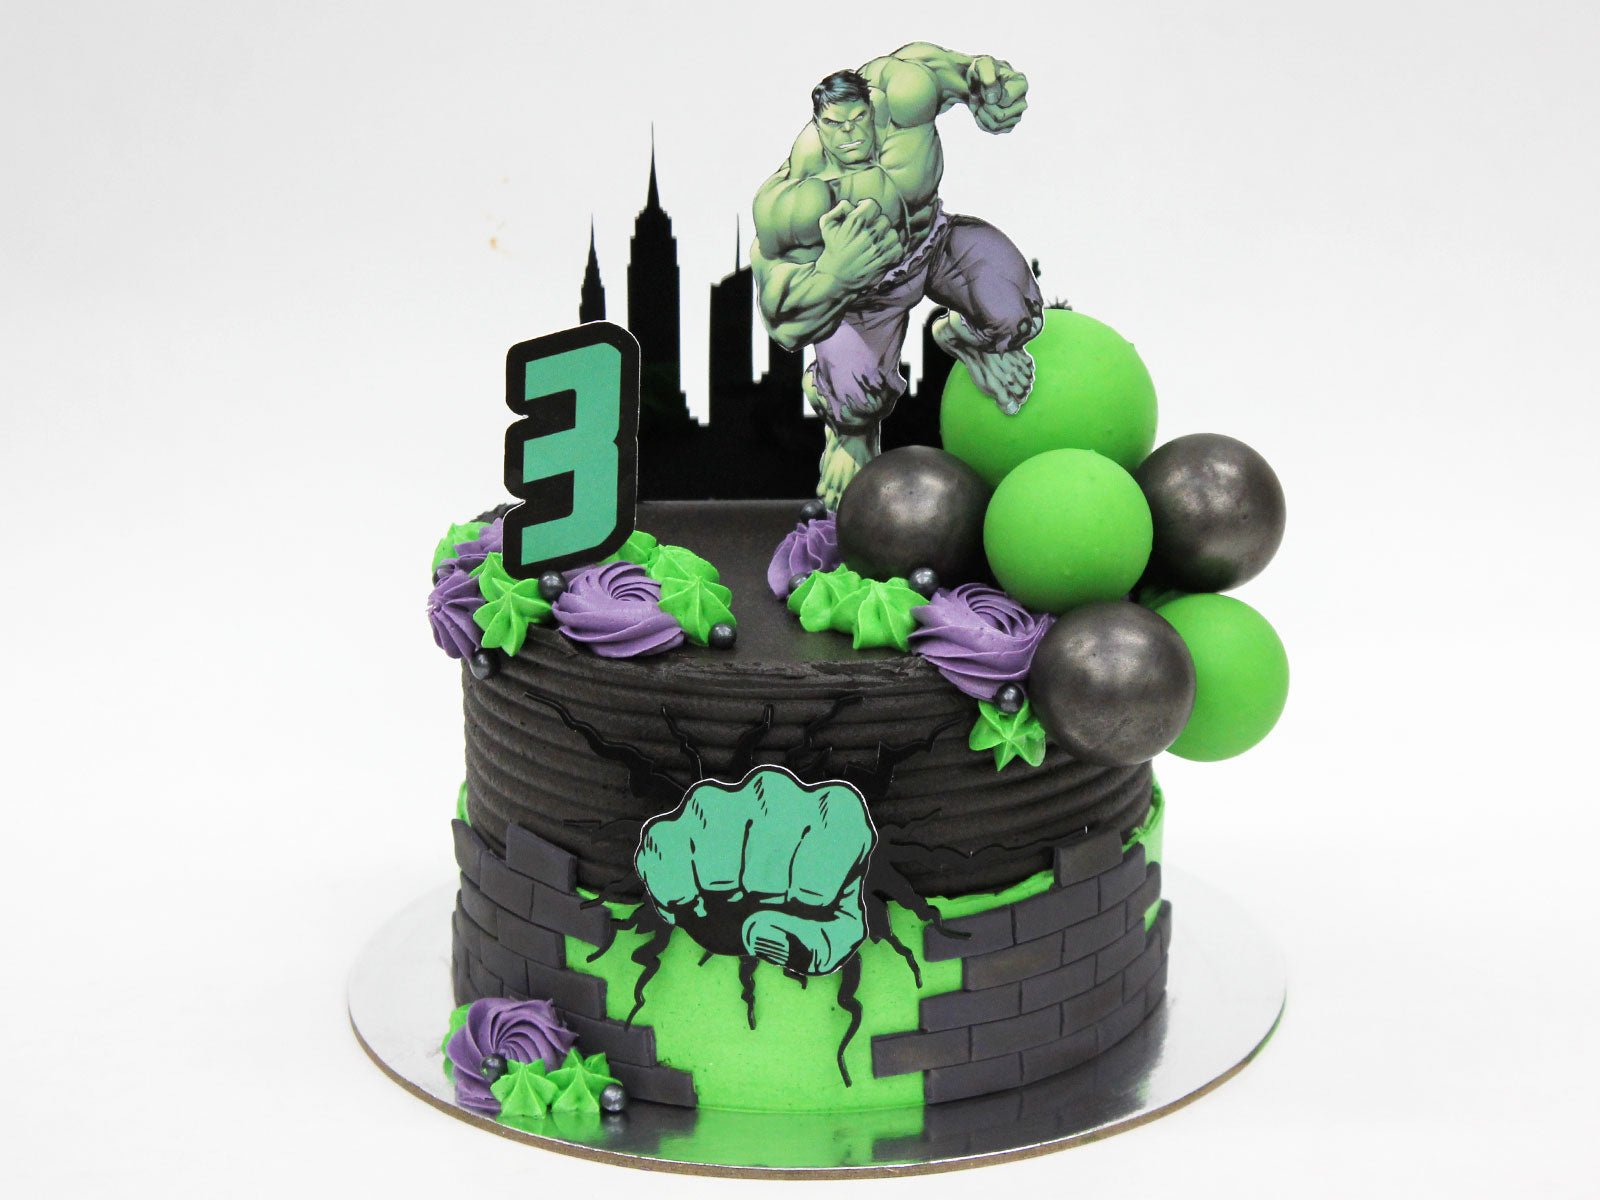 Incredible Hulk Cake | Hulk birthday cakes, Incredible hulk cake, Hulk cakes